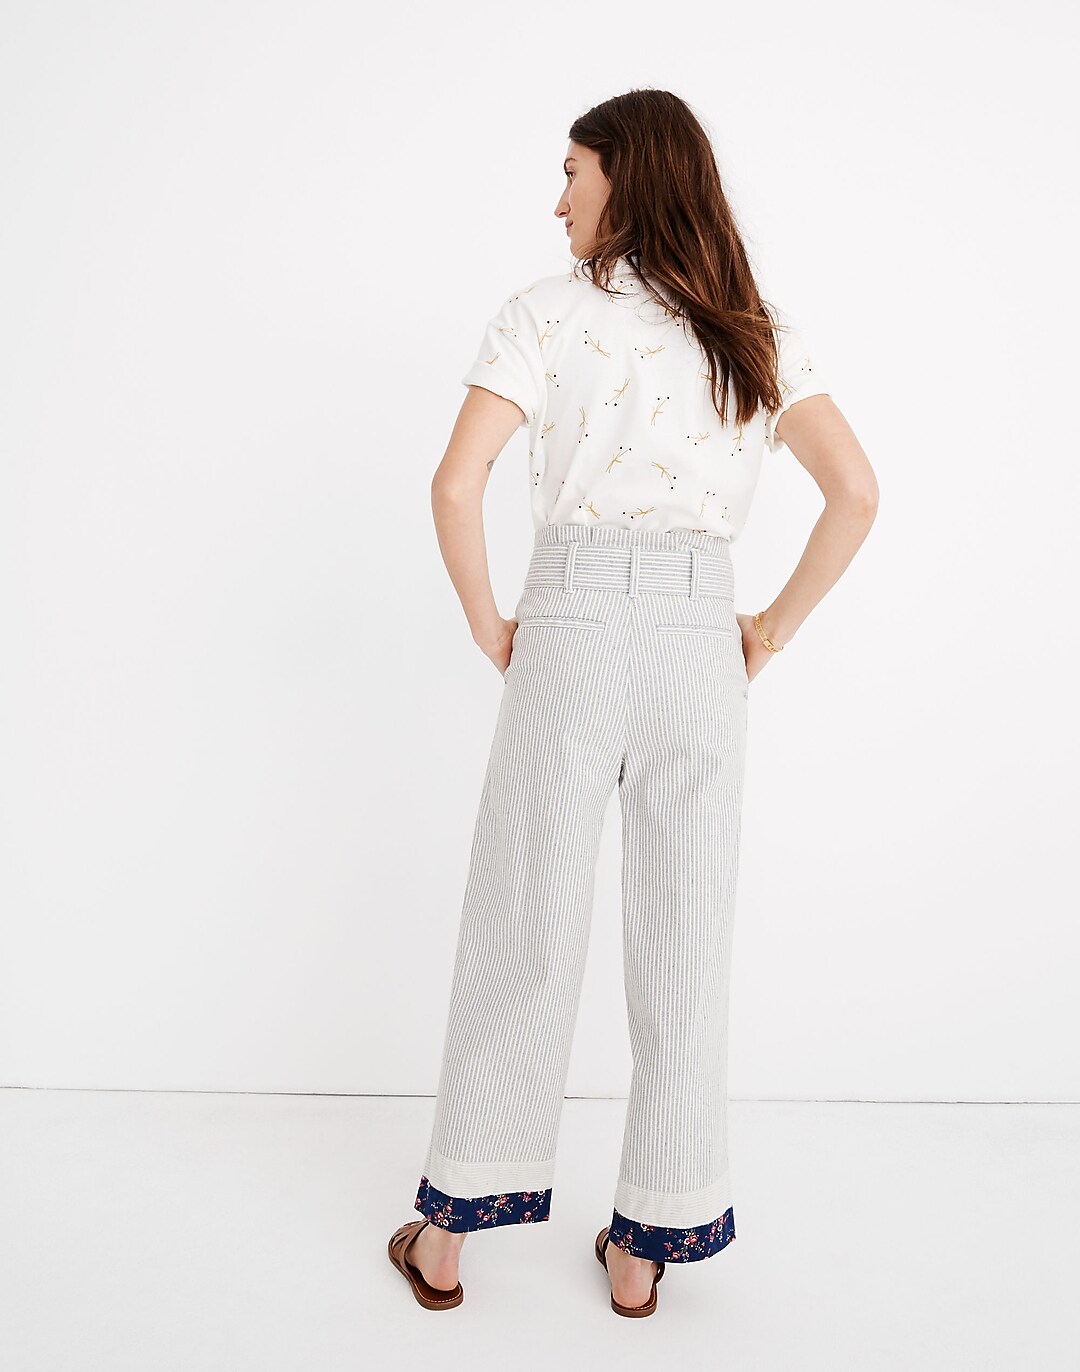 Handmade recycled denim patchwork pants by SilkDenim 1 of a -  日本